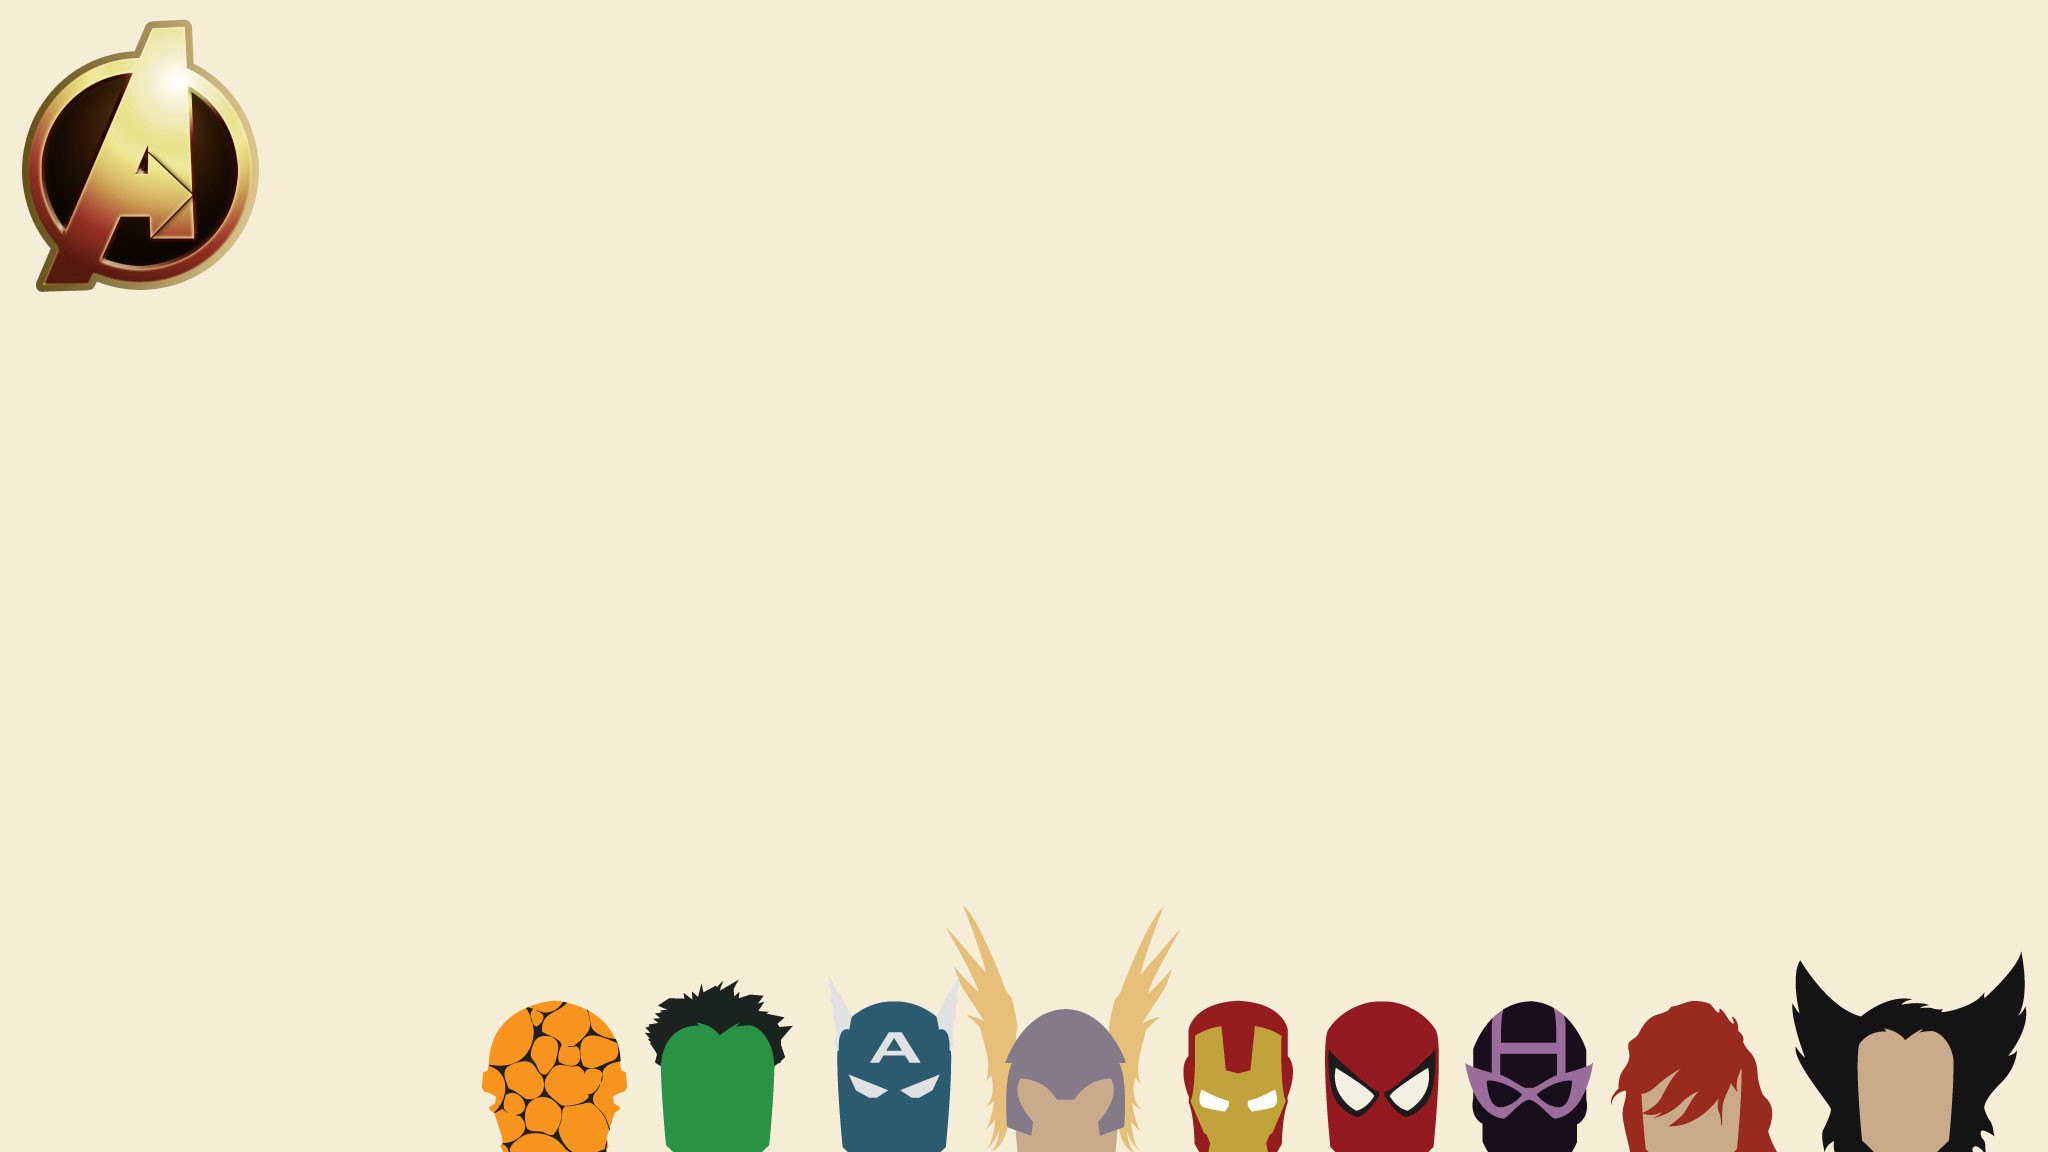 Minimalistic Avengers Ics Marvel Wallpaper